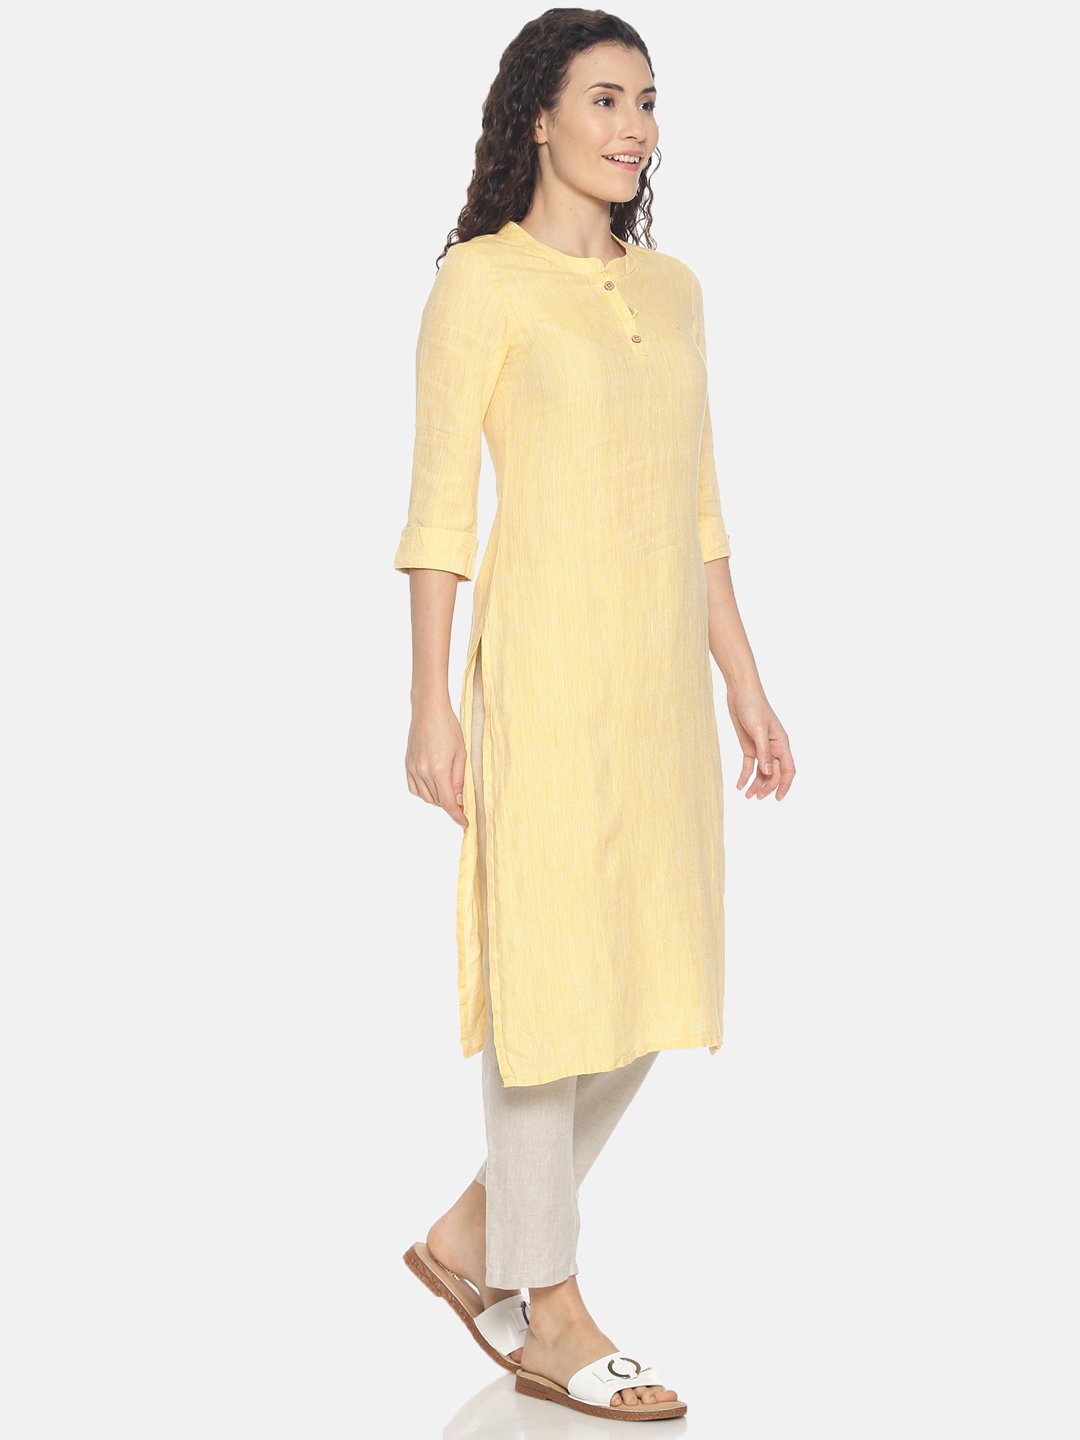 Buy Women's Cotton Blend Printed Straight Kurta [Yellow-Kurti-M] Size: M,  Color: Yellow at Amazon.in